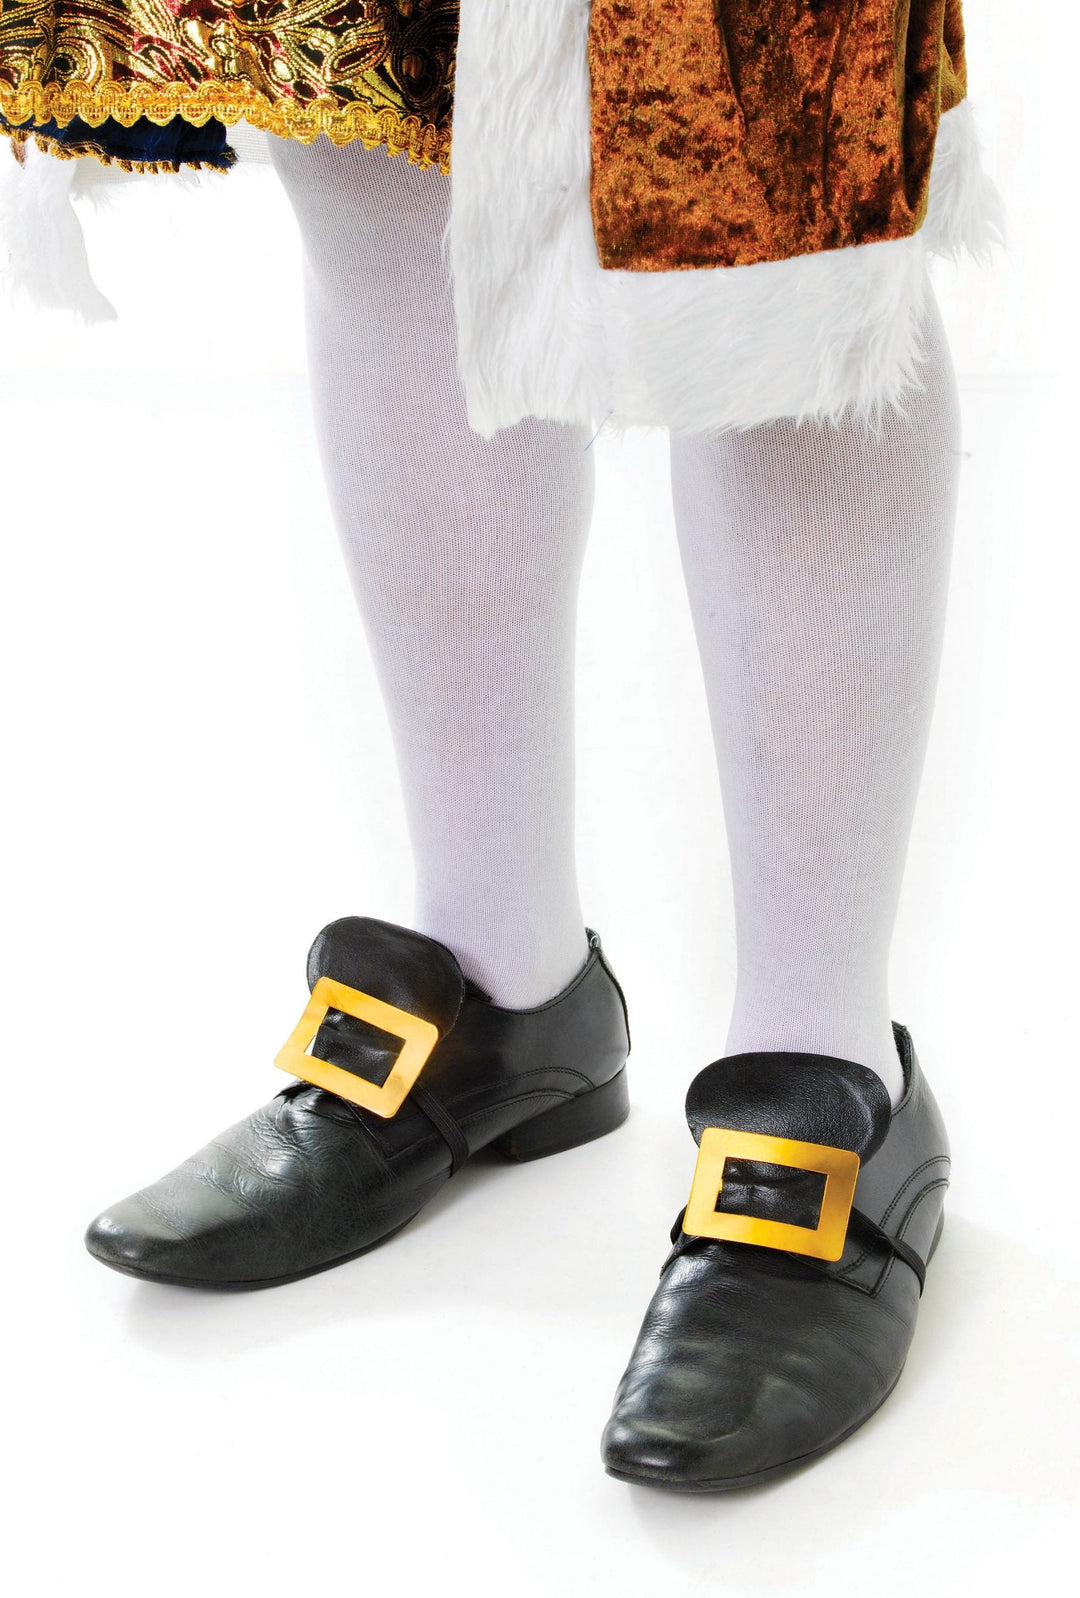 Knee High Adult Medieval White Socks Costume Accessory_1